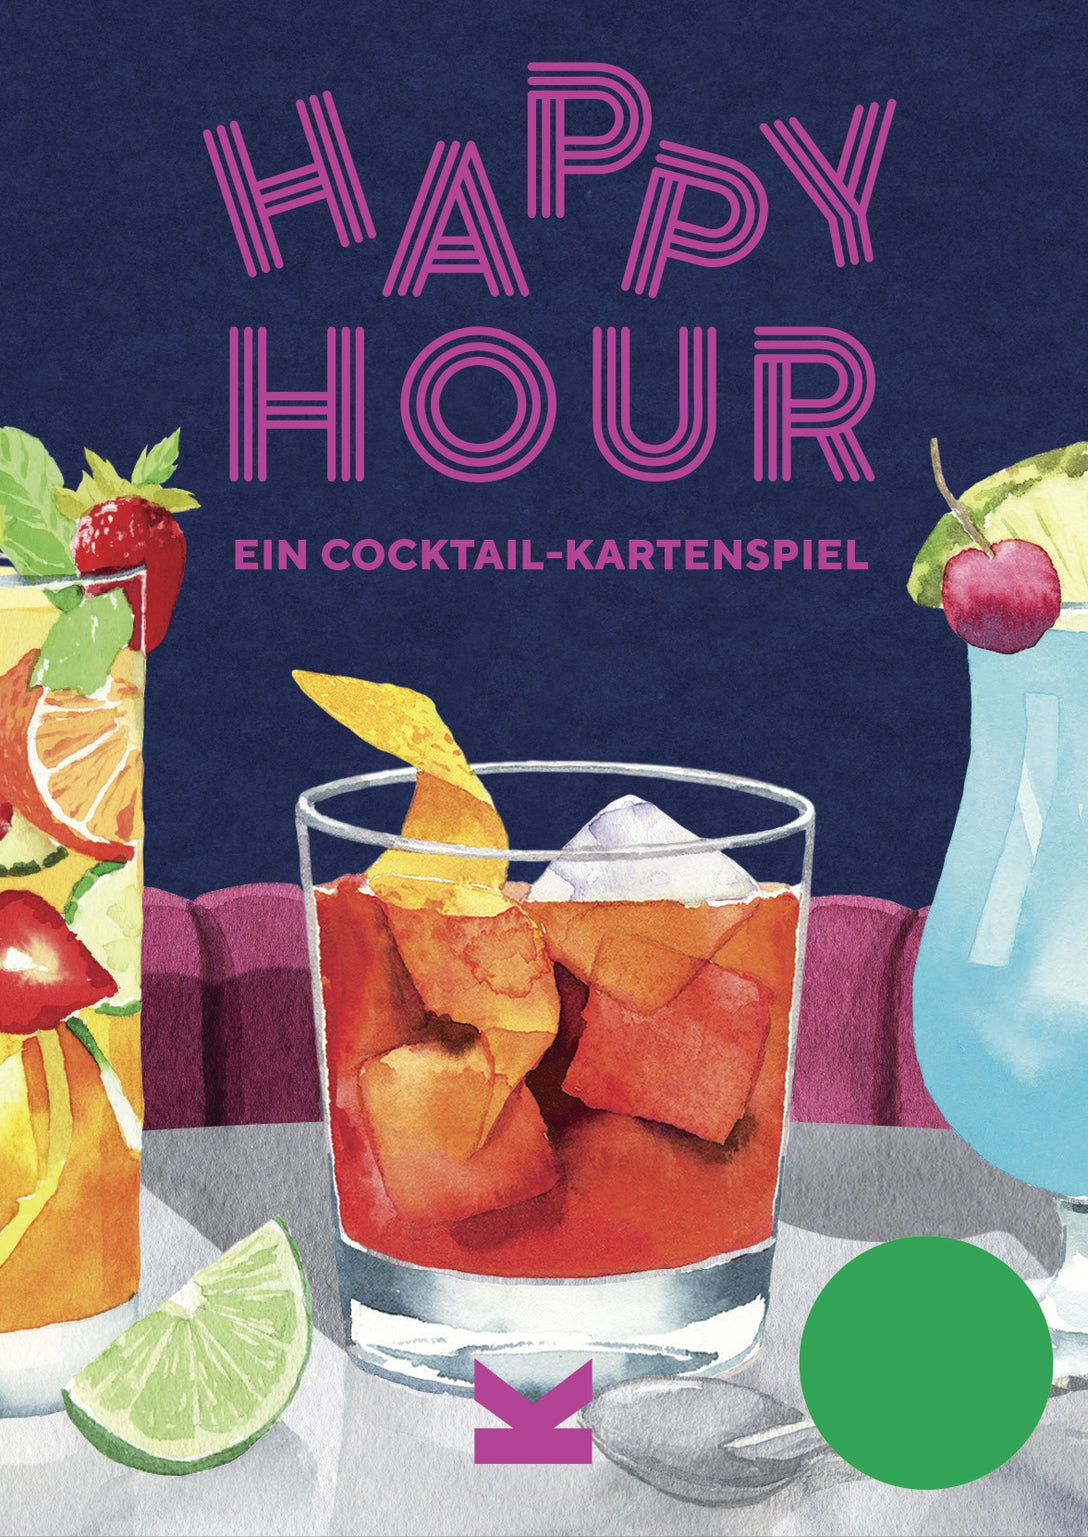 Happy Hour by Marcel George, Ulrich Korn, Laura Gladwin